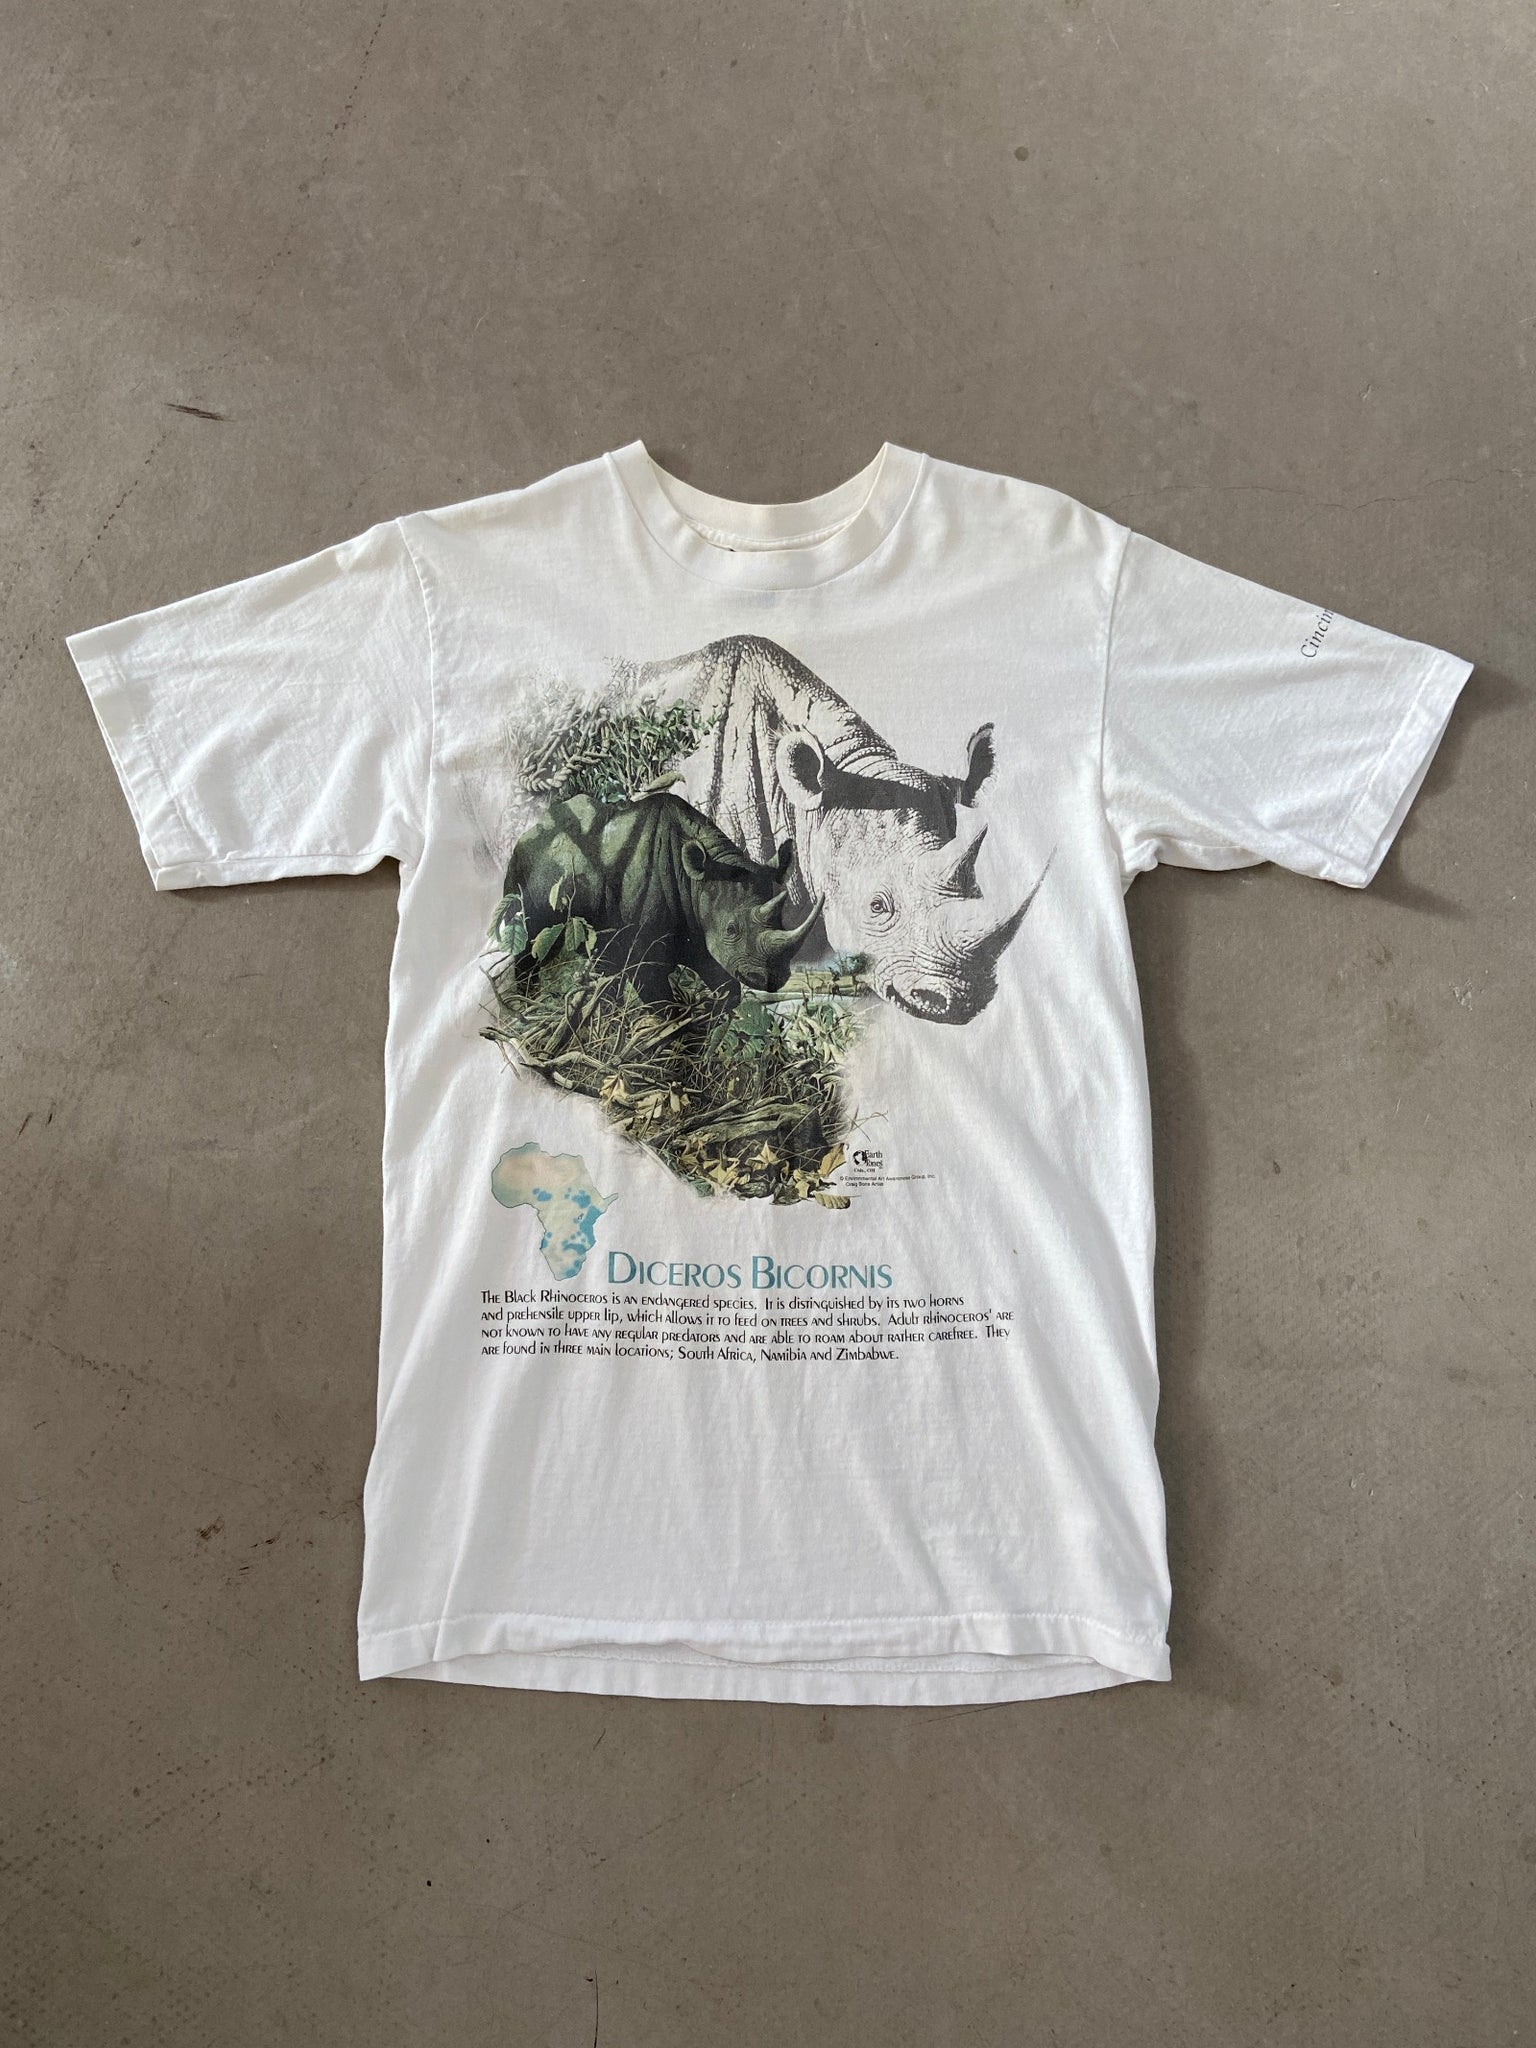 Diceros Bicornis T-shirt - M